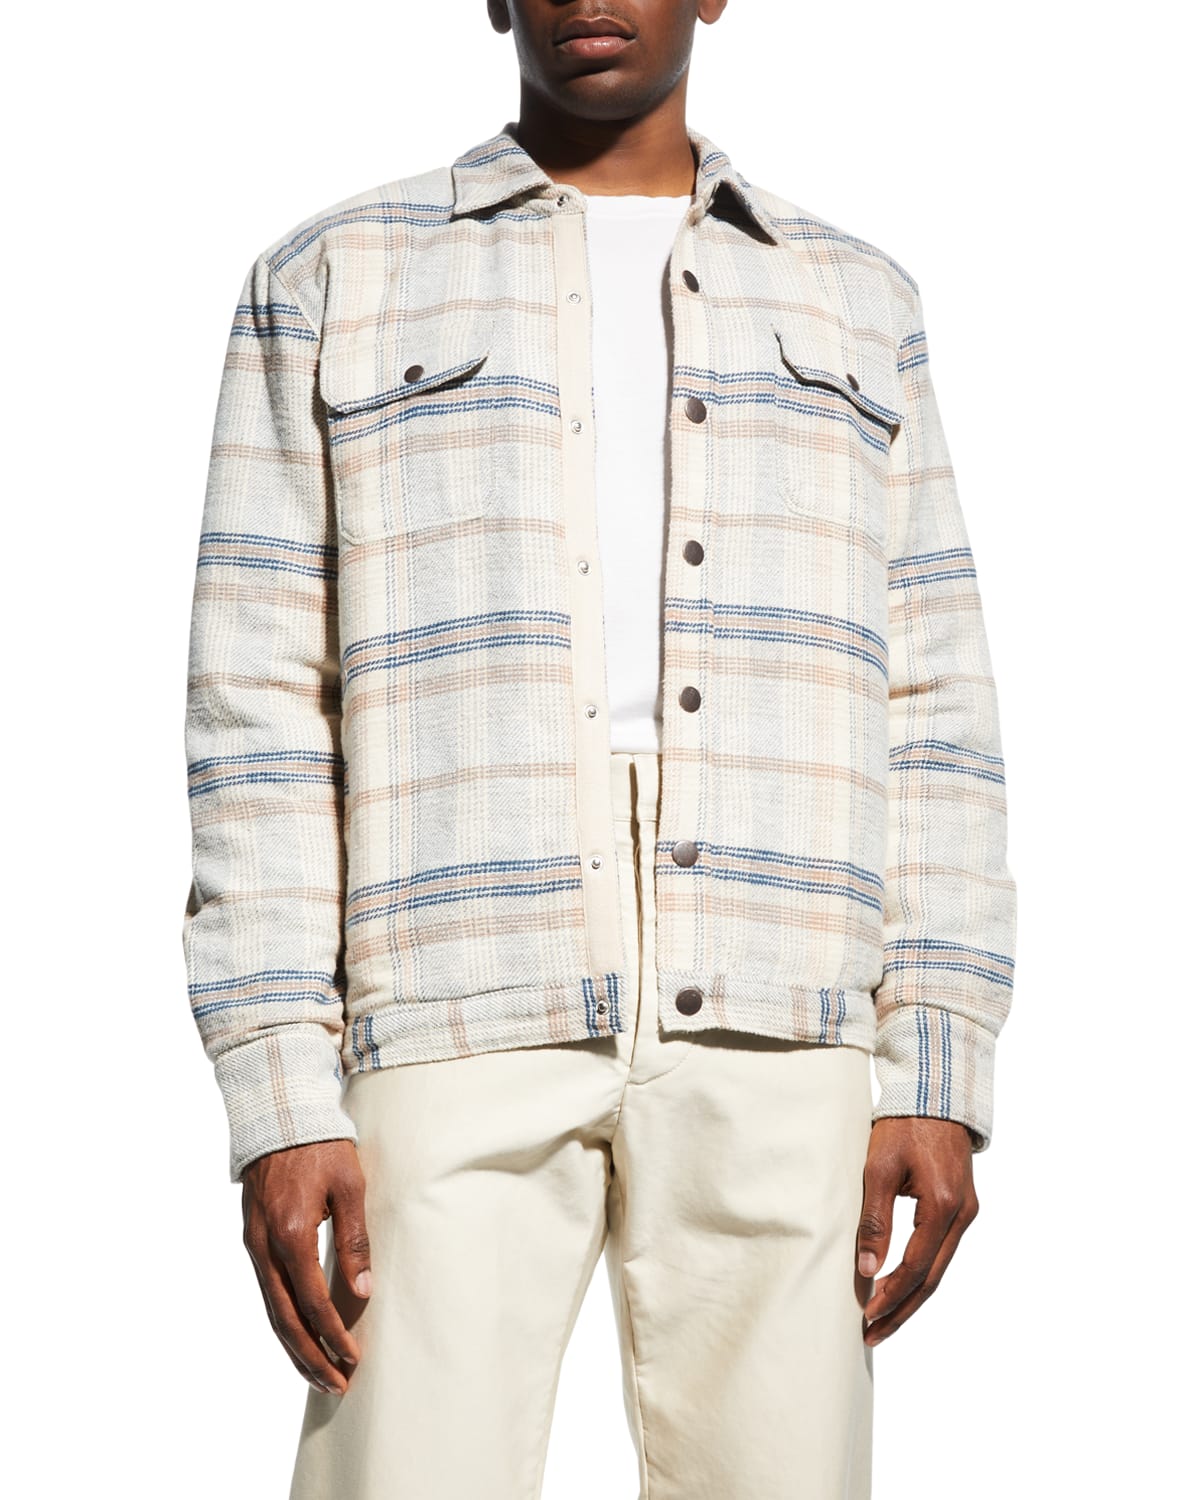 SNAPP New Blazer Jacket Button Front Long Sleeve Unlined Cotton Linen Blend NWT